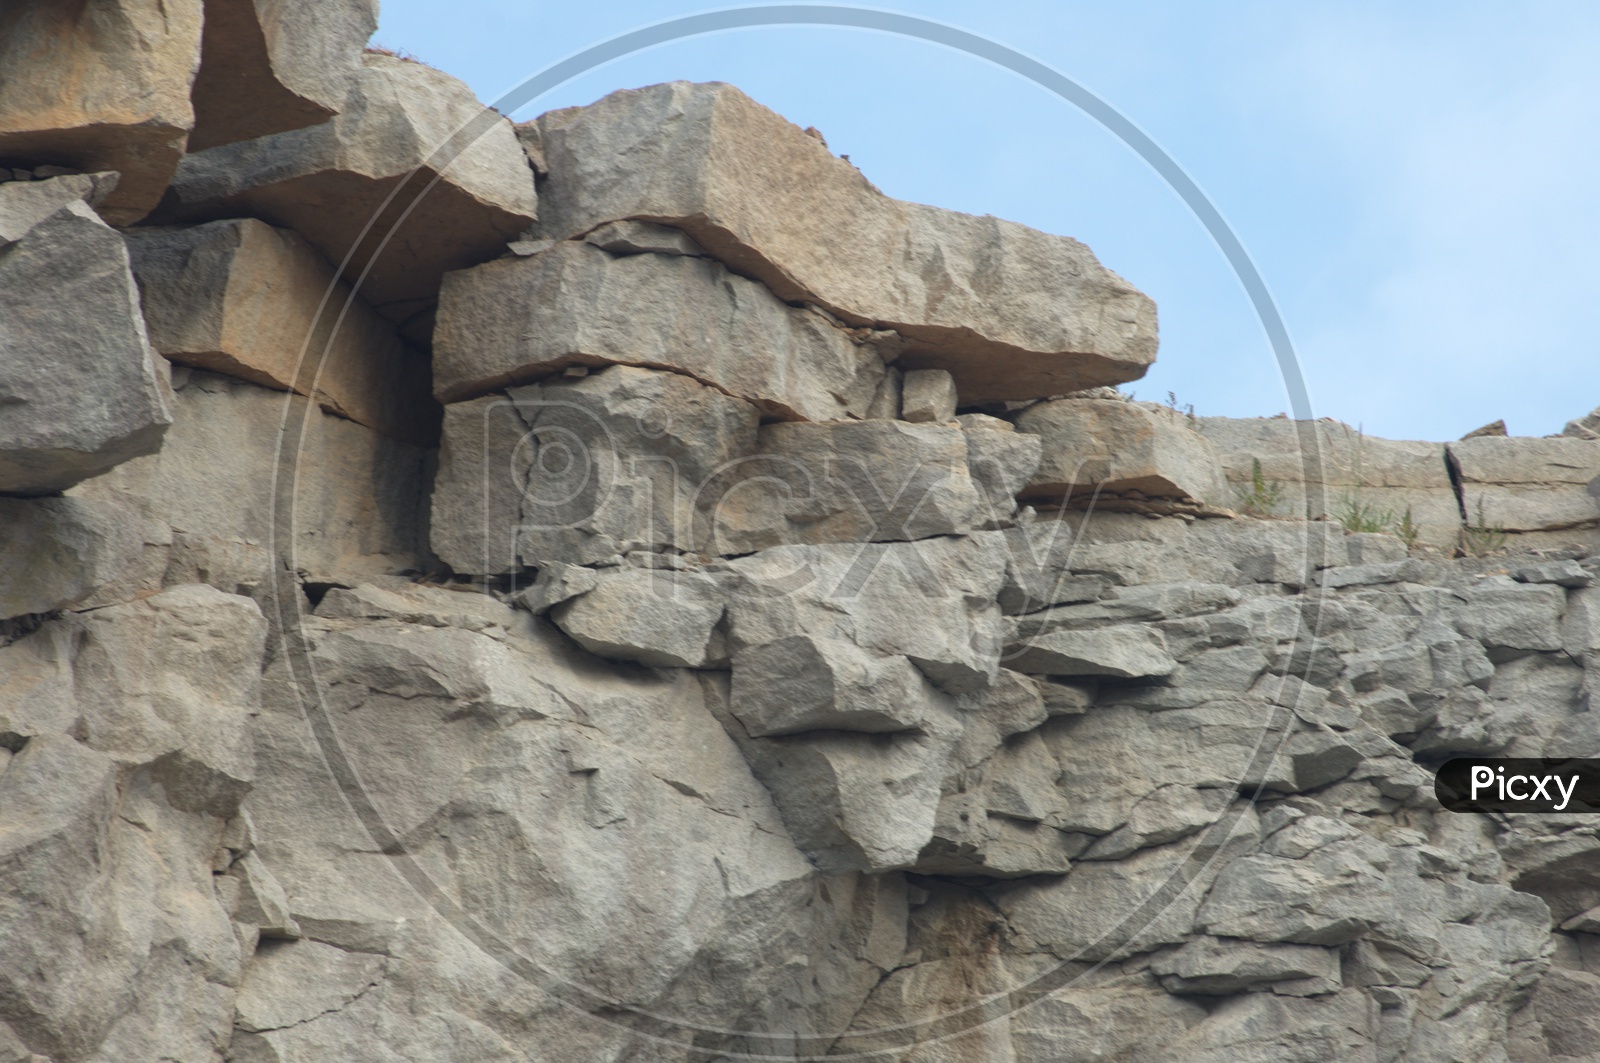 Massive Granite Structures of a Quarry